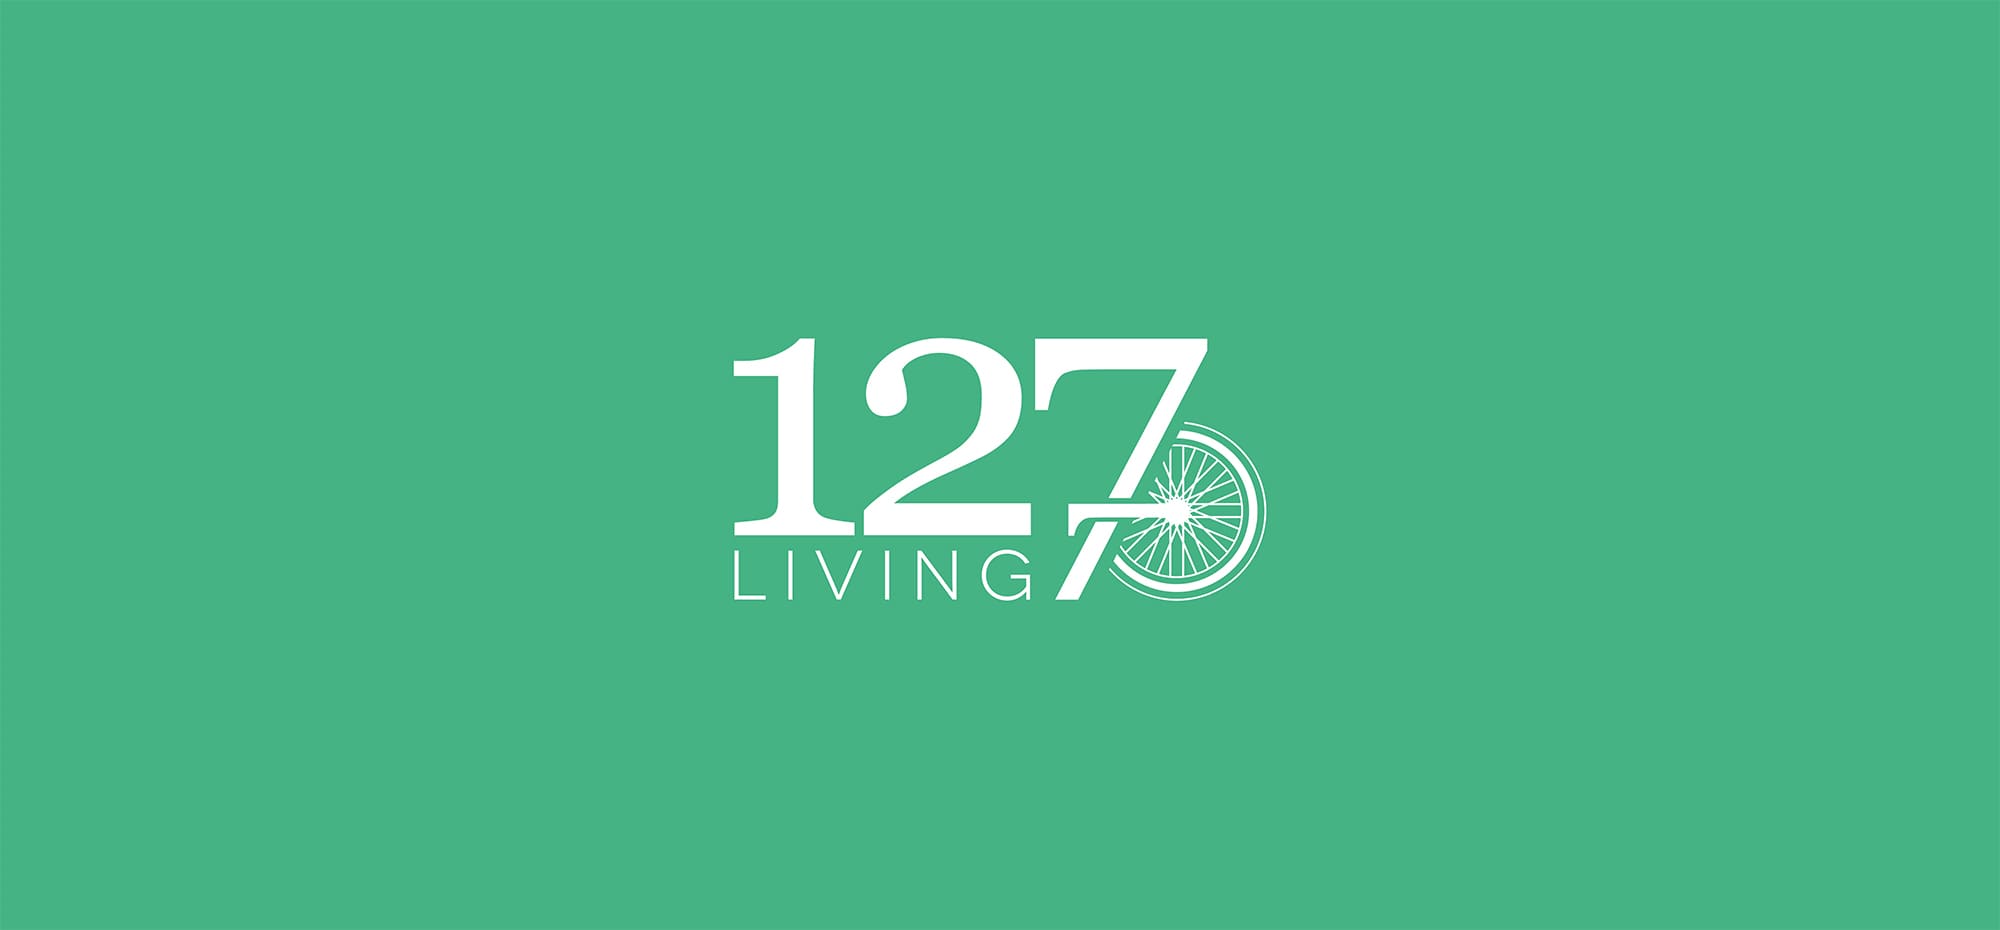 127 LIVING - ES